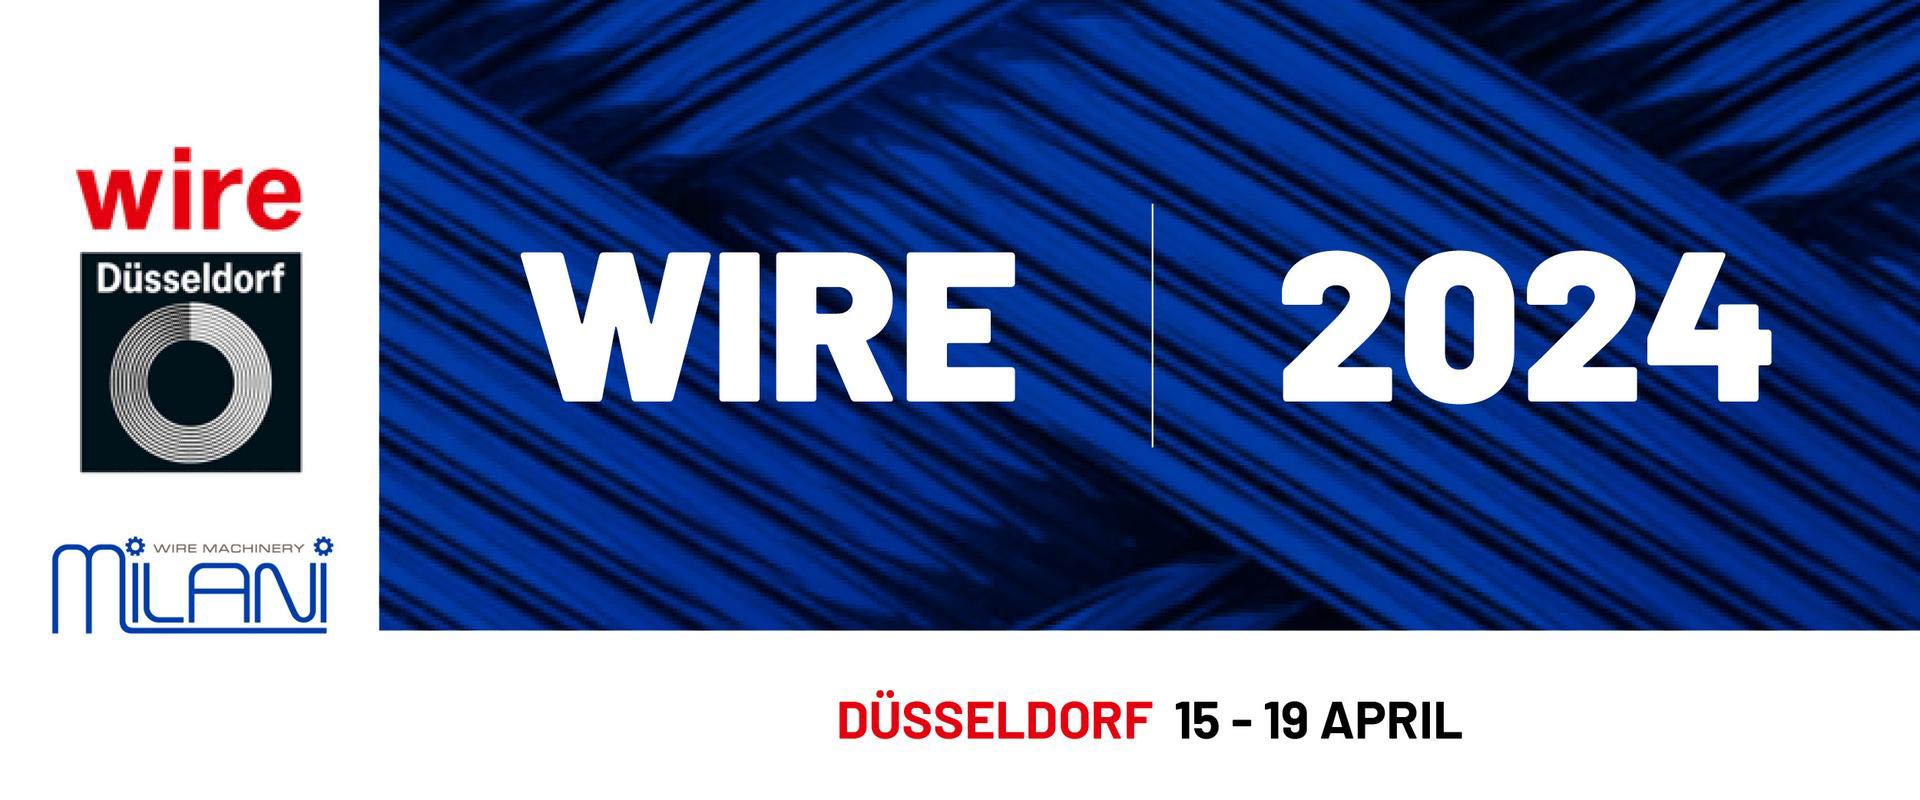 wire Dusseldorf 2024 milani machinery